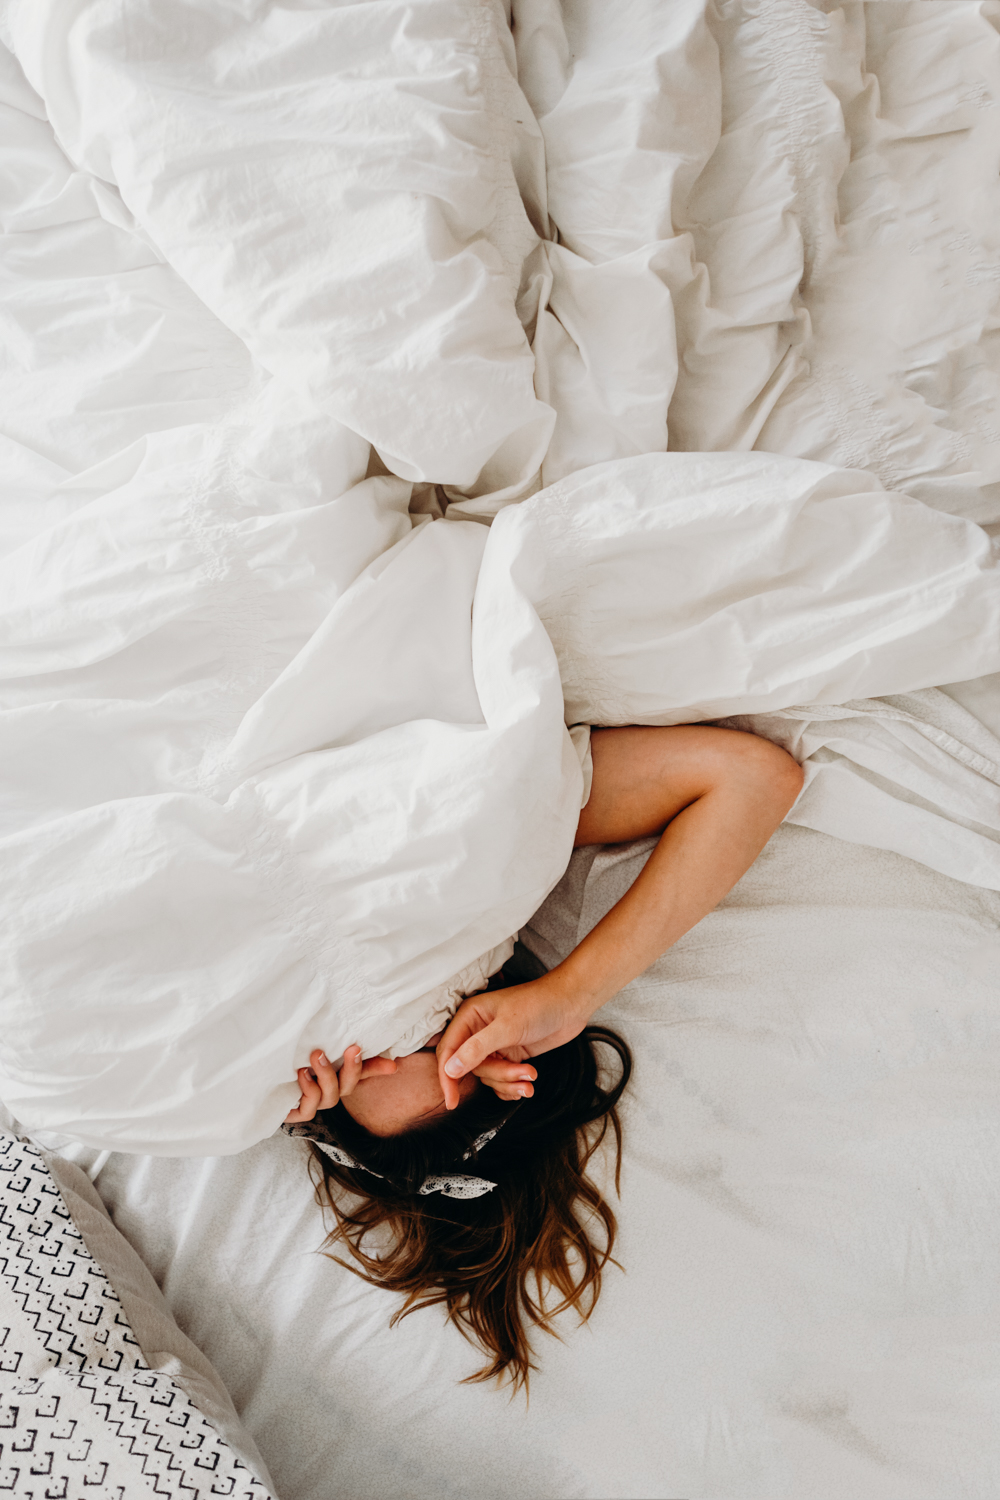 The Habits That Helped Improve My Sleep